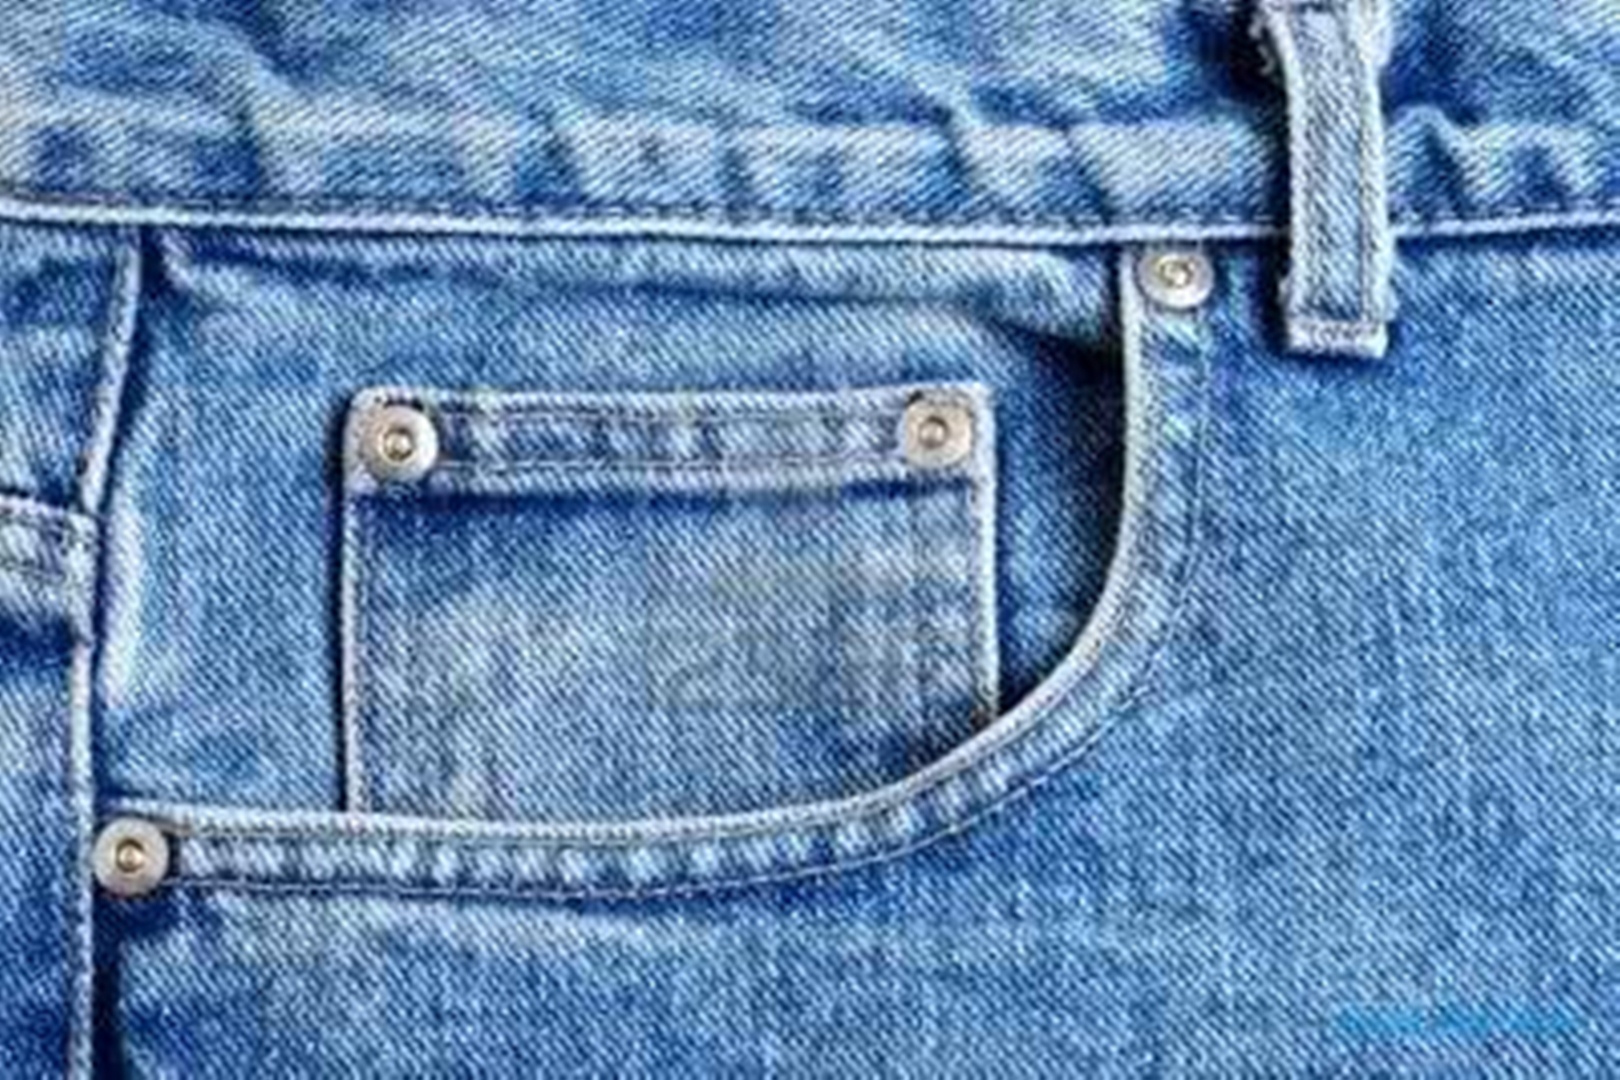 5 Fungsi Kancing Kecil di Kantong Celana Jeans, Ternyata Ini Gunanya